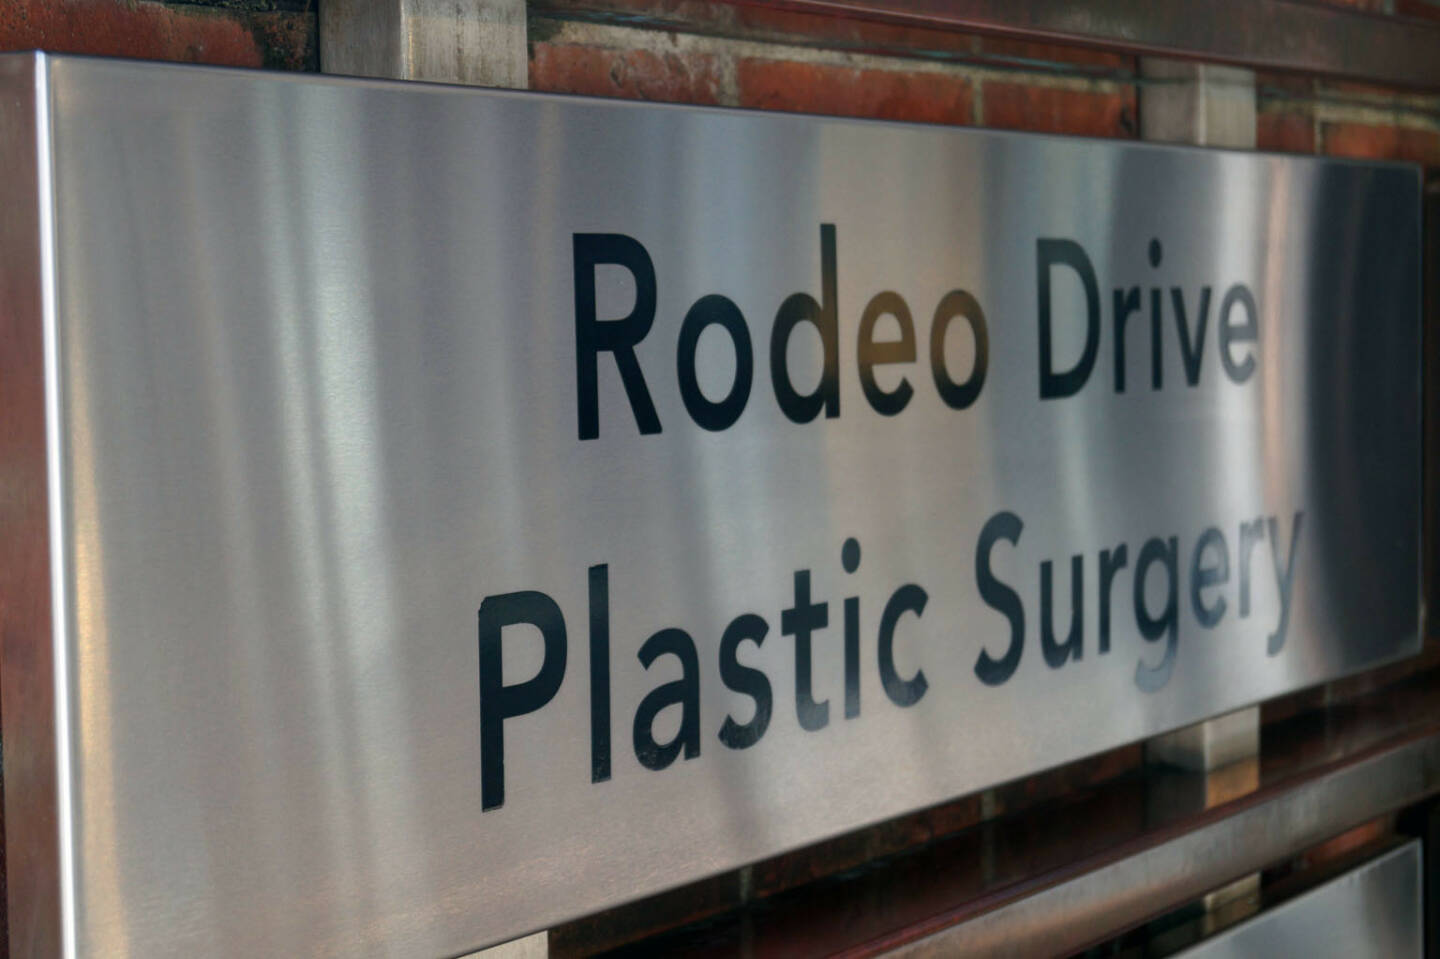 Rodeo Drive Plastic Surgery (Bild: bestevent.at)